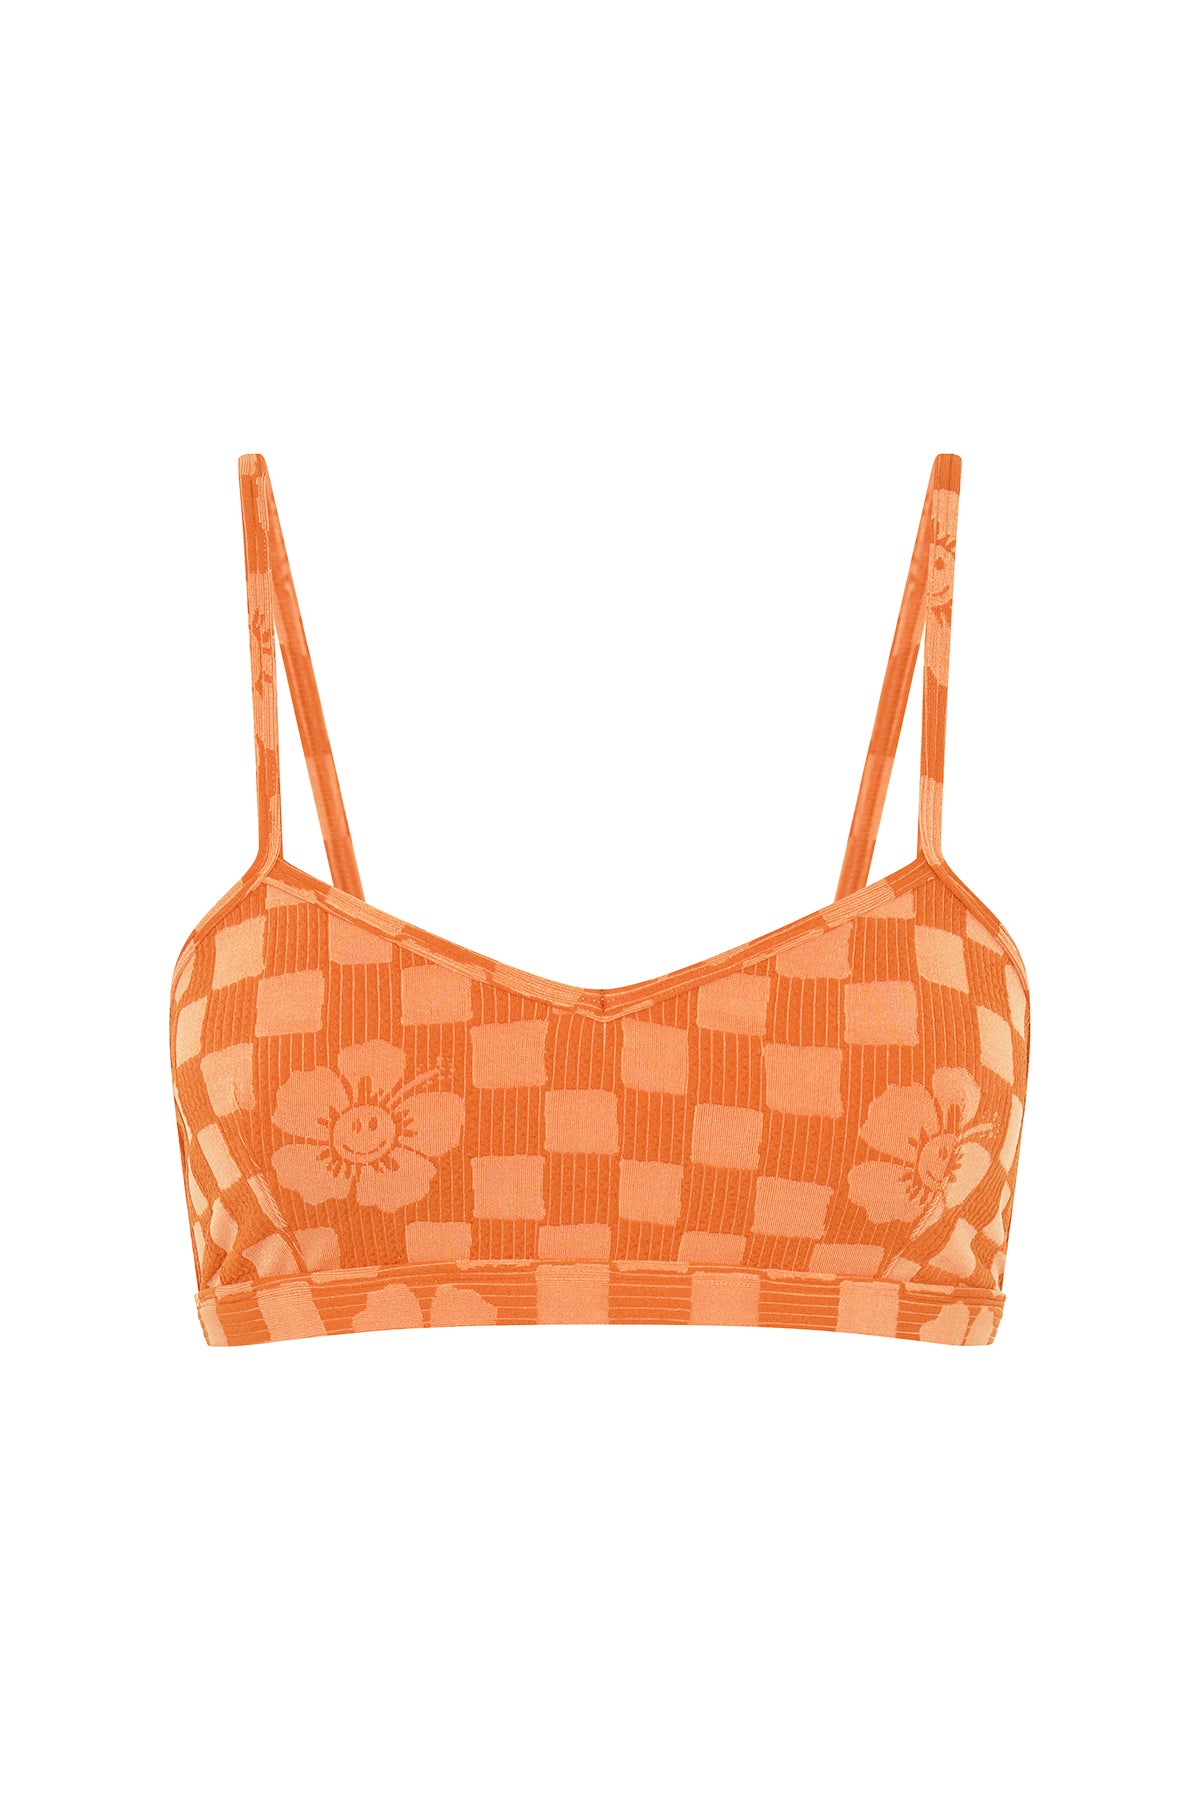 Happy Check Bikini Crop Top - Burnt Orange – Emma Mulholland on Holiday